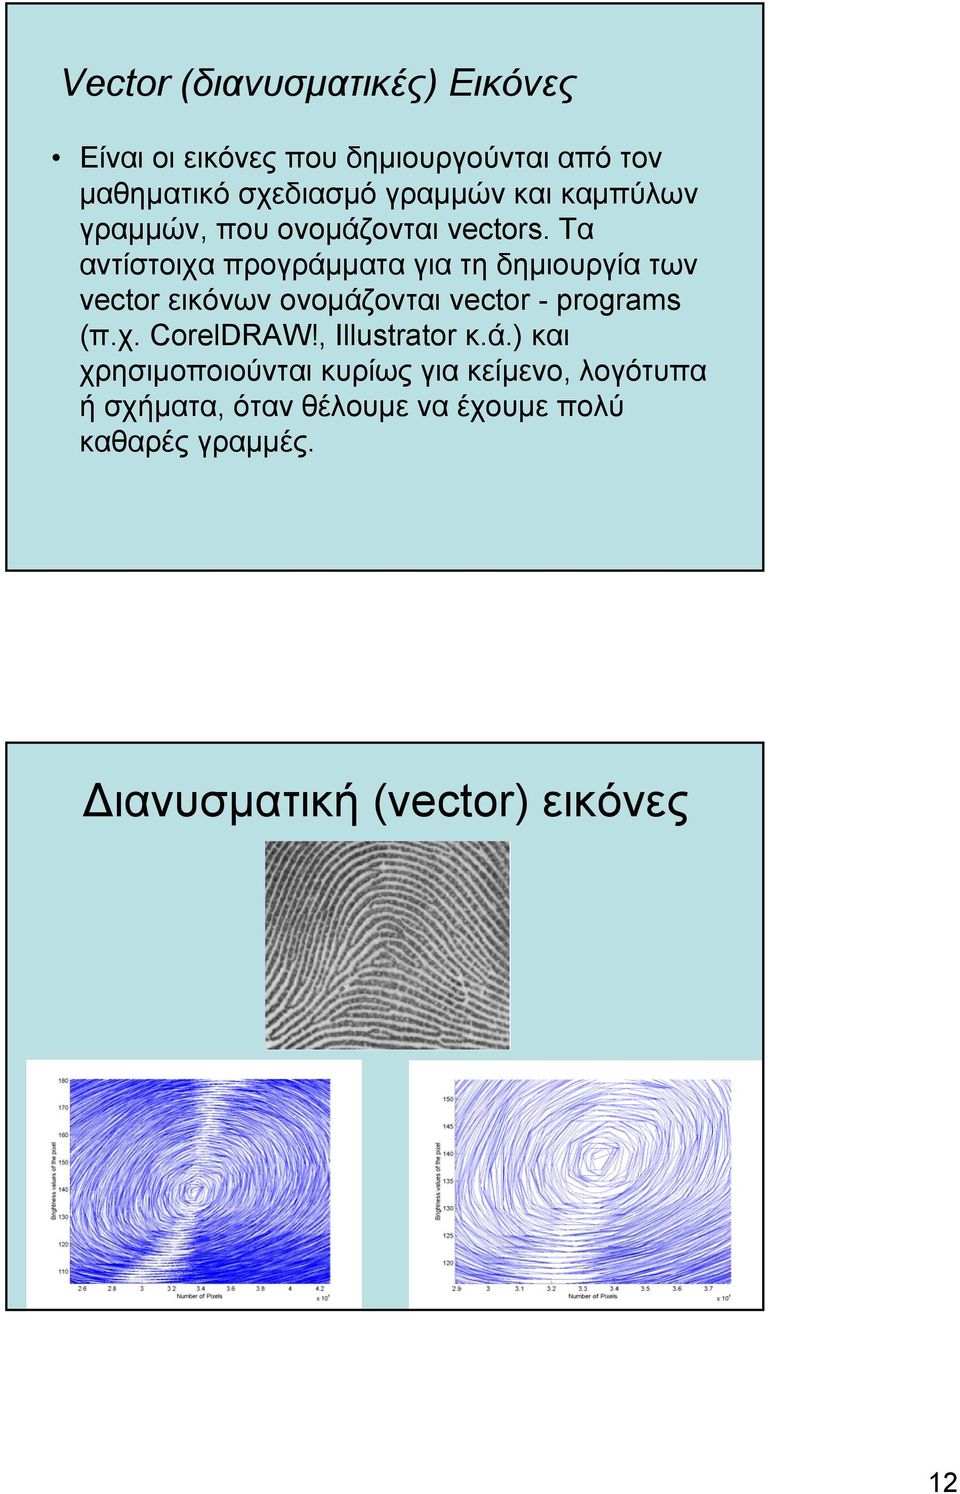 Tα αντίστοιχα προγράµµατα για τη δηµιουργία των vector εικόνων ονοµάζονται vector - programs (π.χ. CorelDRAW!